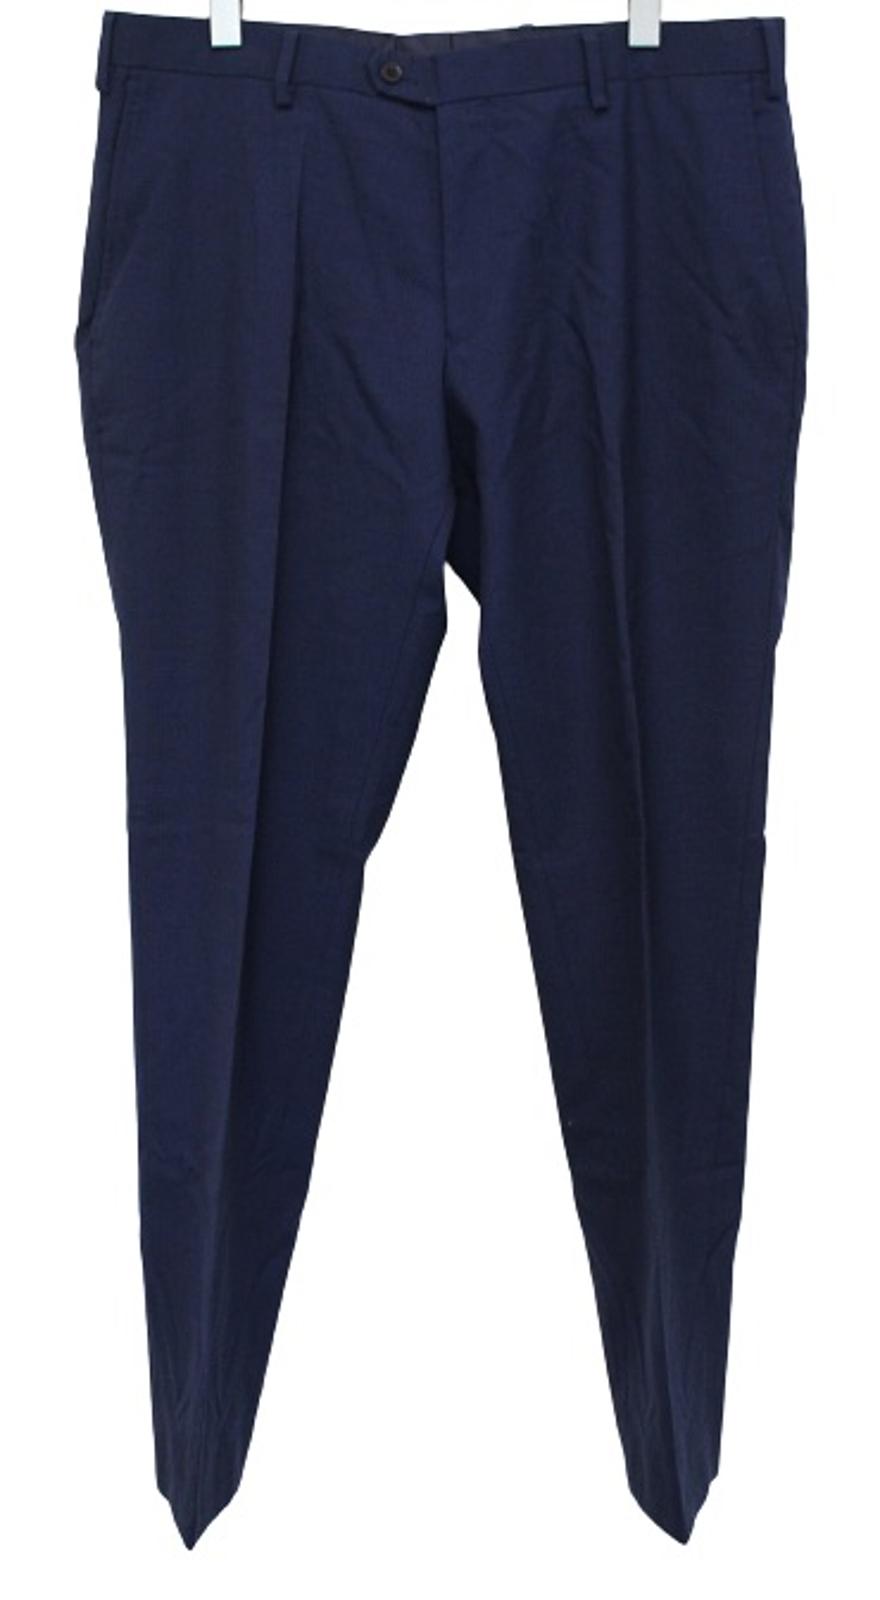 CHARLES TYRWHITT Men's Navy Blue Zip Fly Slim Pure Wool Suit Trousers W36 L32